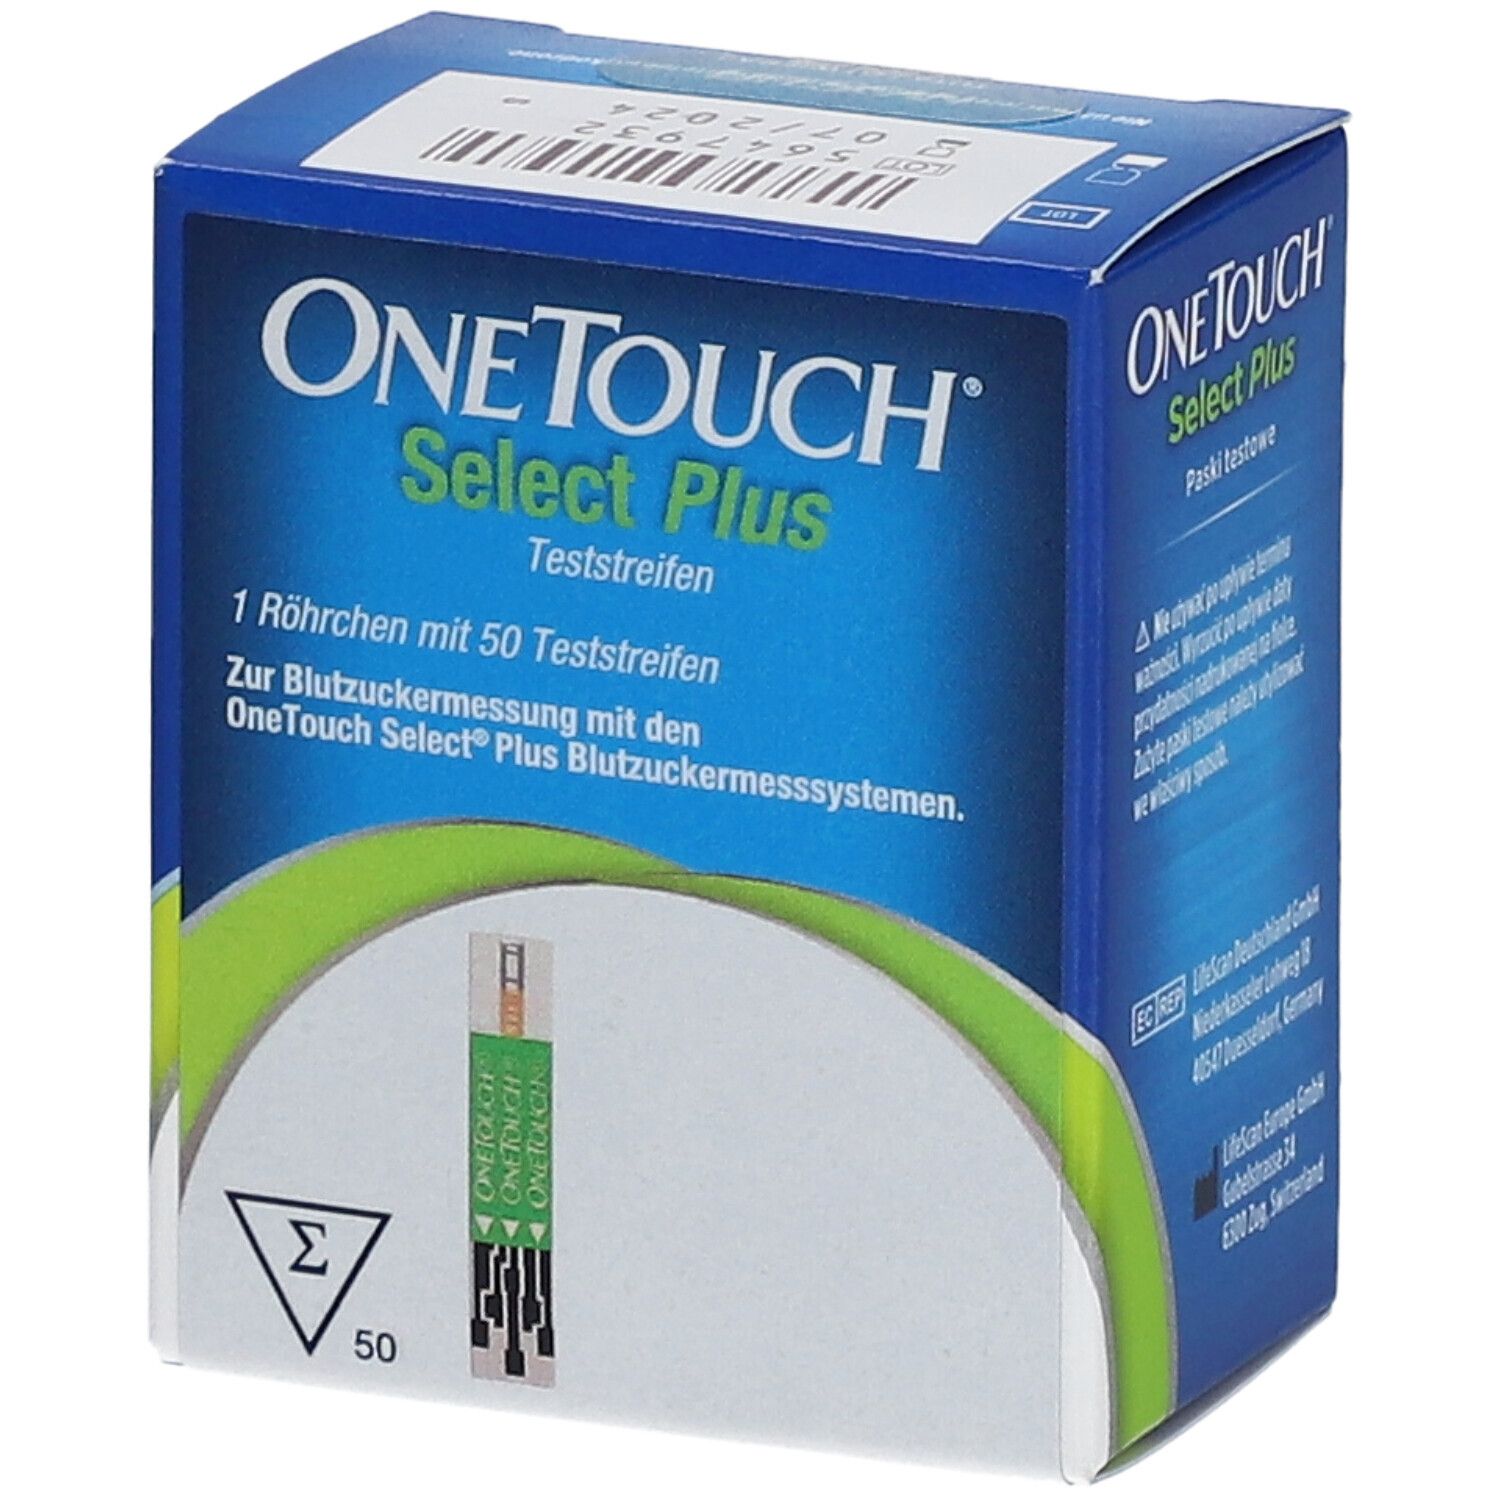 Onetouch Select Plus blood sugar test strips for blood sugar measurement in diabetes (sugar disease)